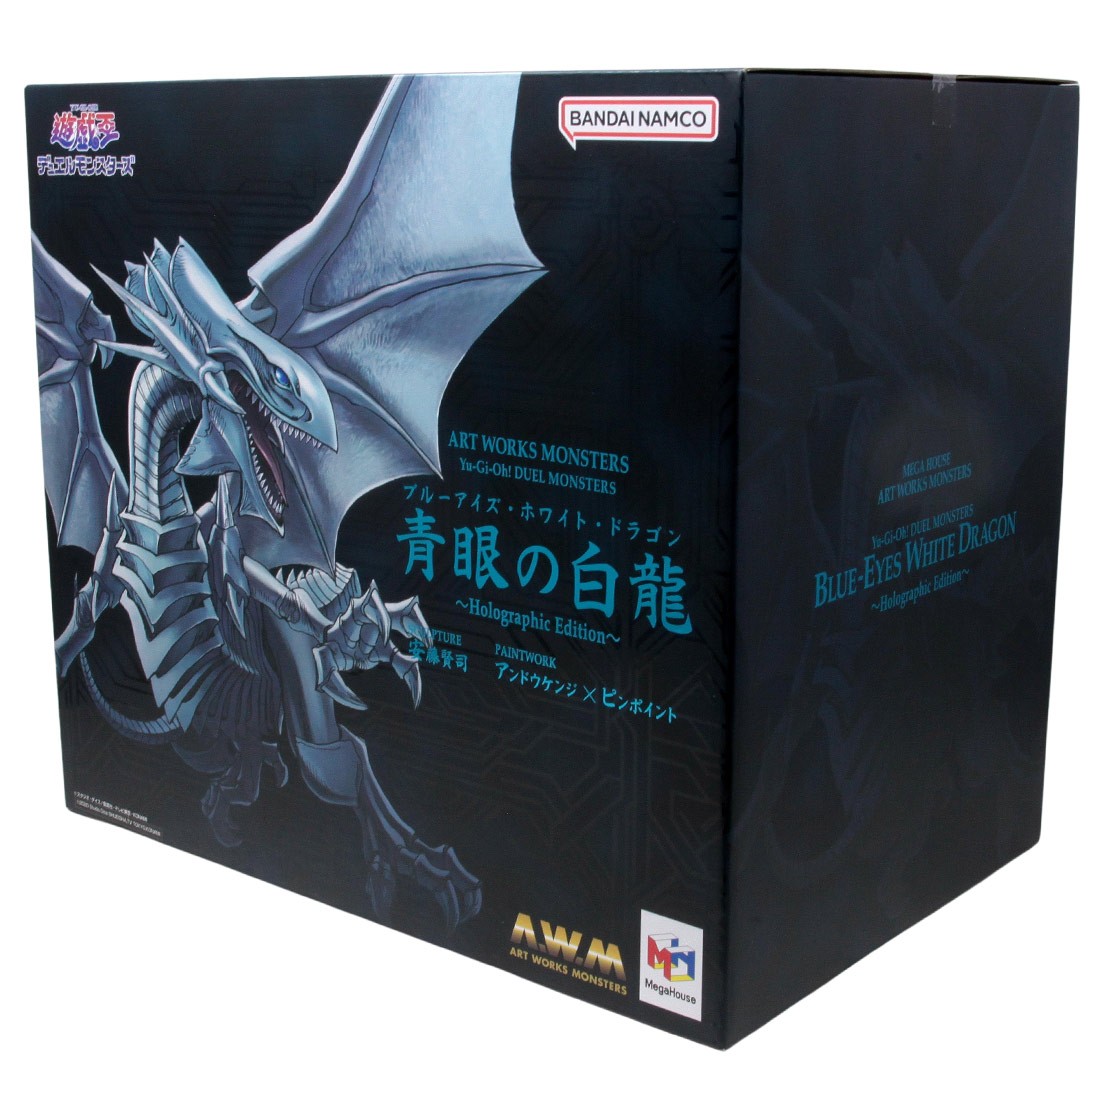 Yu-Gi-Oh! Duel Monsters: Hikari no Pyramid - Blue-Eyes Shining Dragon -  Deluxe Model (Mattel) —